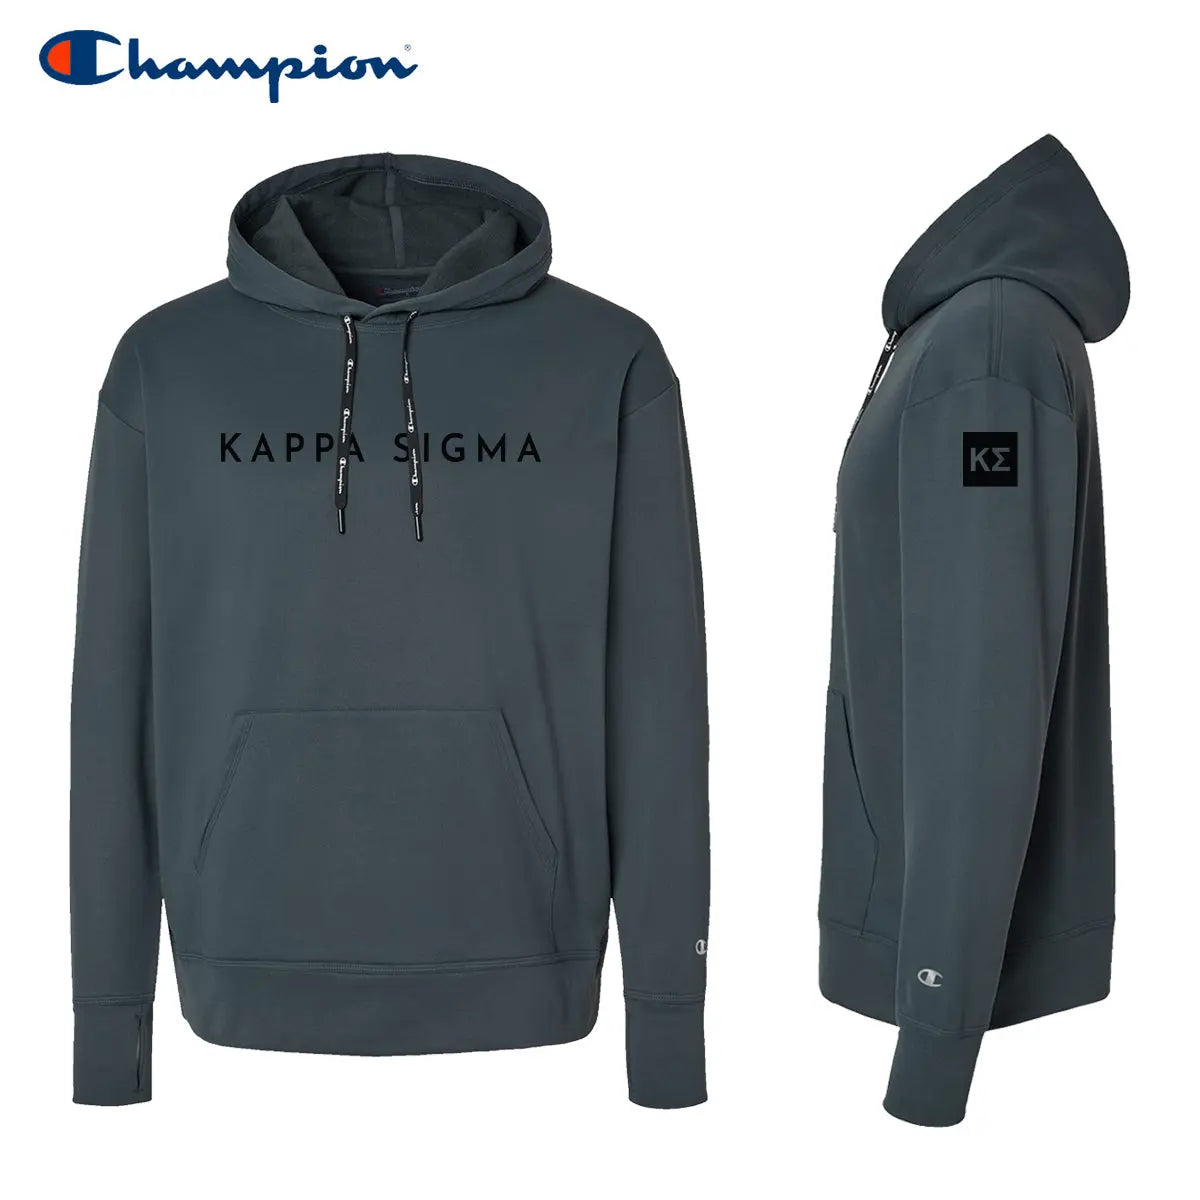 Kappa Sig Champion Performance Hoodie - Kappa Sigma Official Store